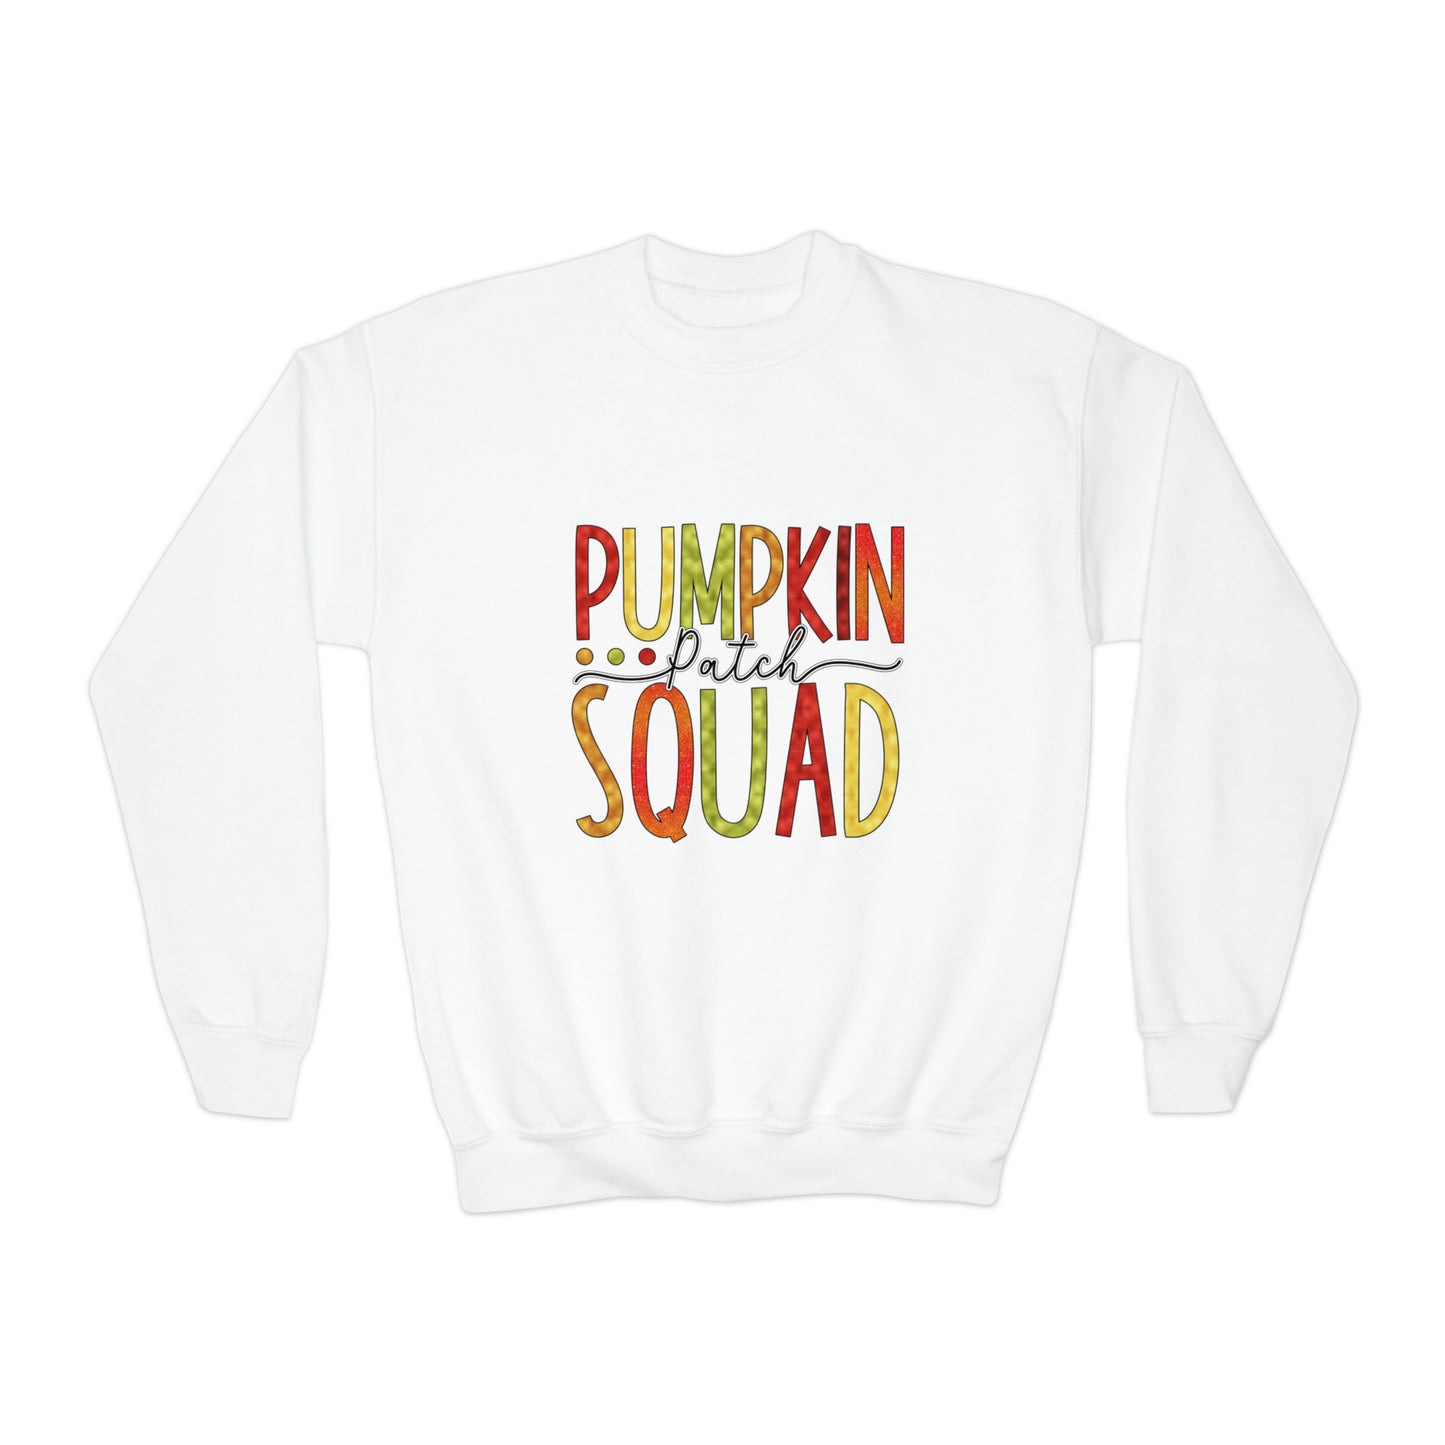 Style 6 Pumpkin Patch Squad Youth Crewneck Sweatshirt